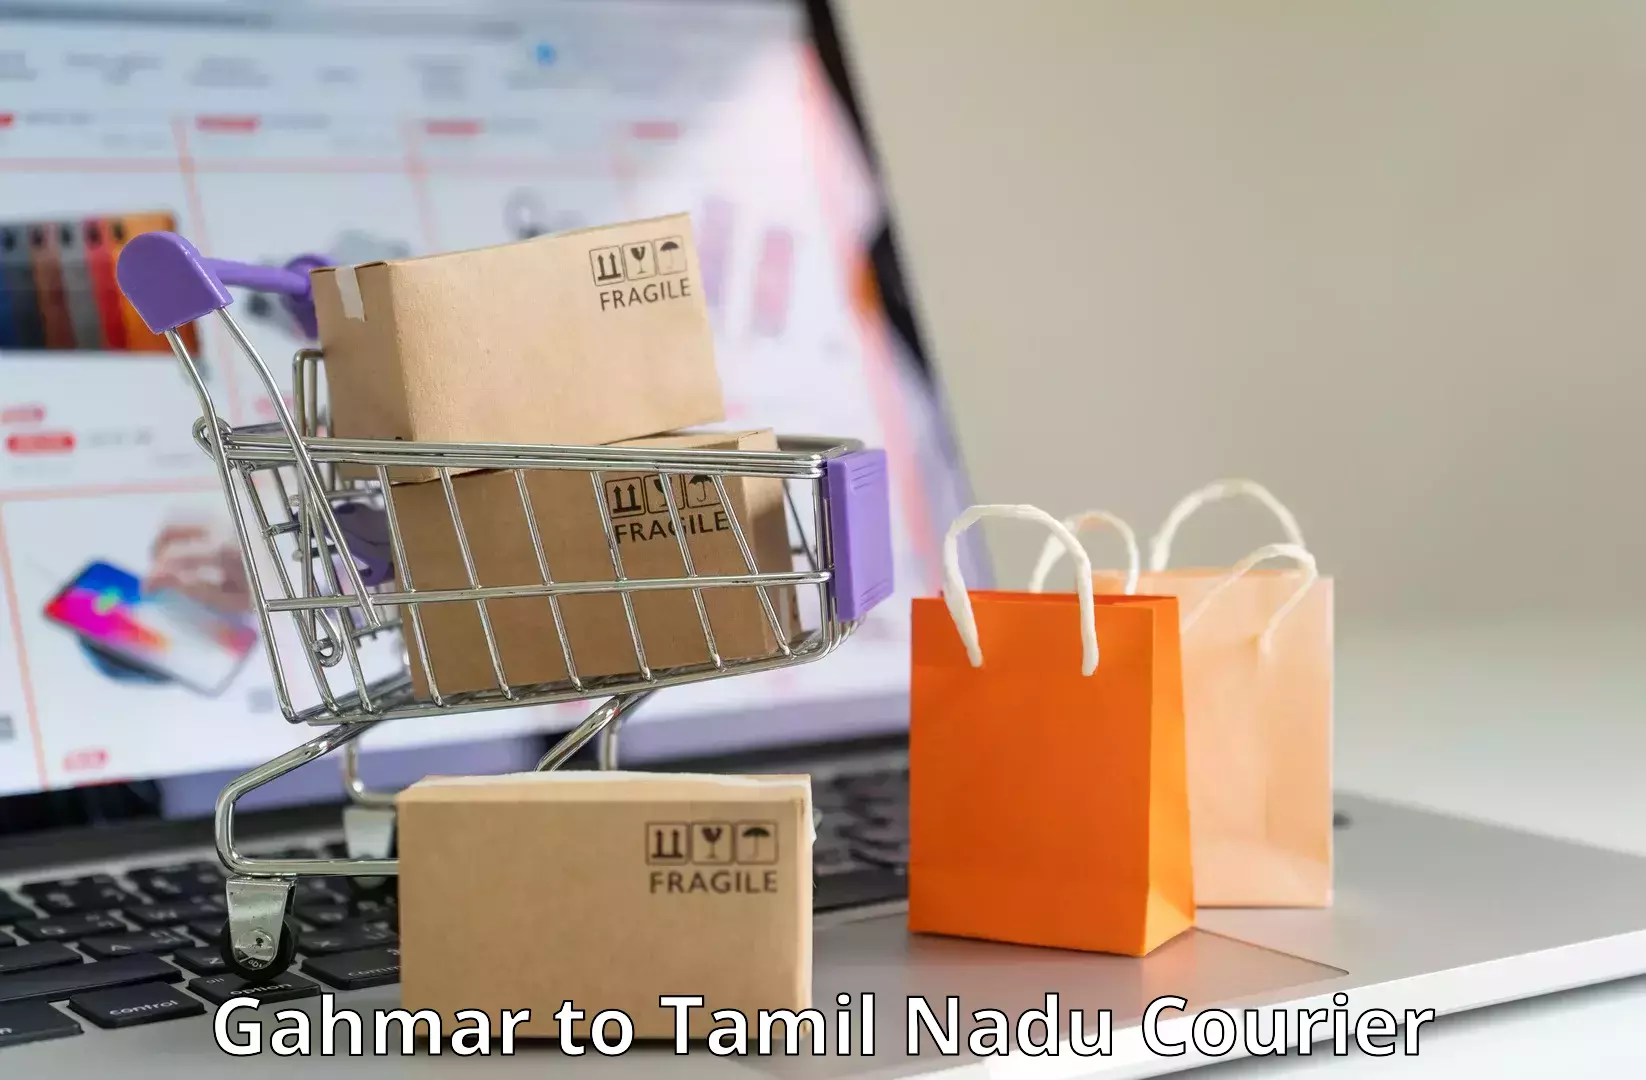 Automated parcel services Gahmar to Melmaruvathur